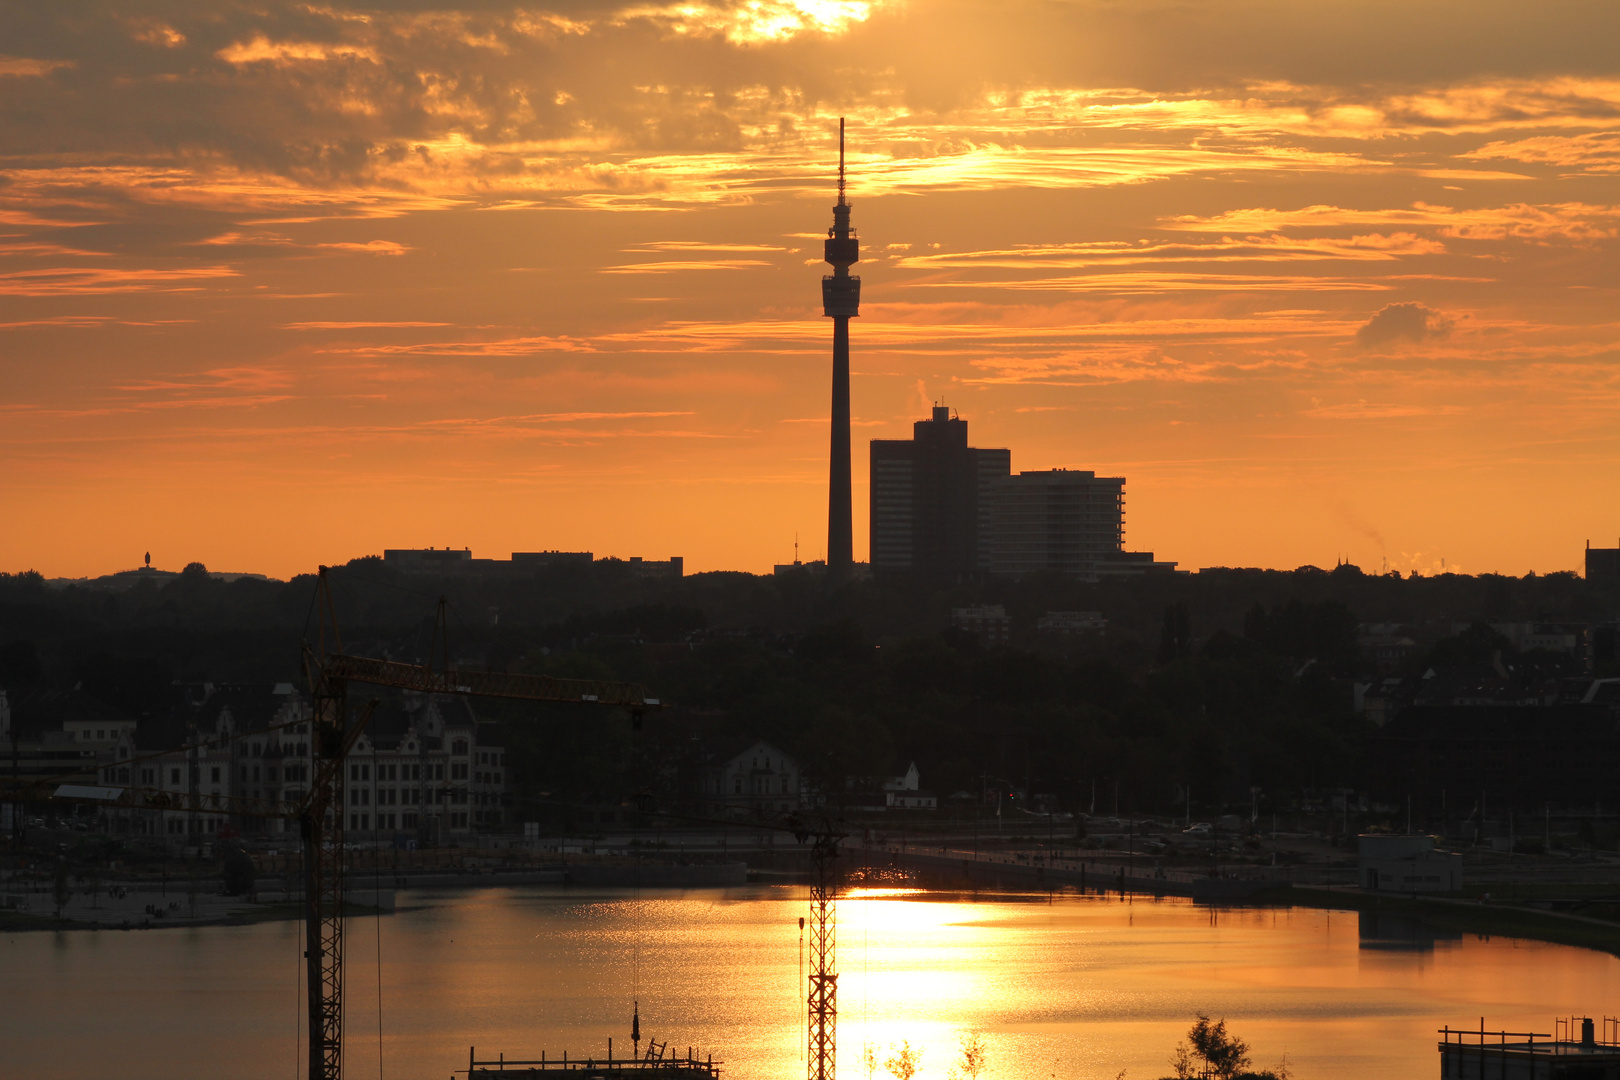 Sonnenuntergang Phoenixsee Dortmund mit Funkturm Florian